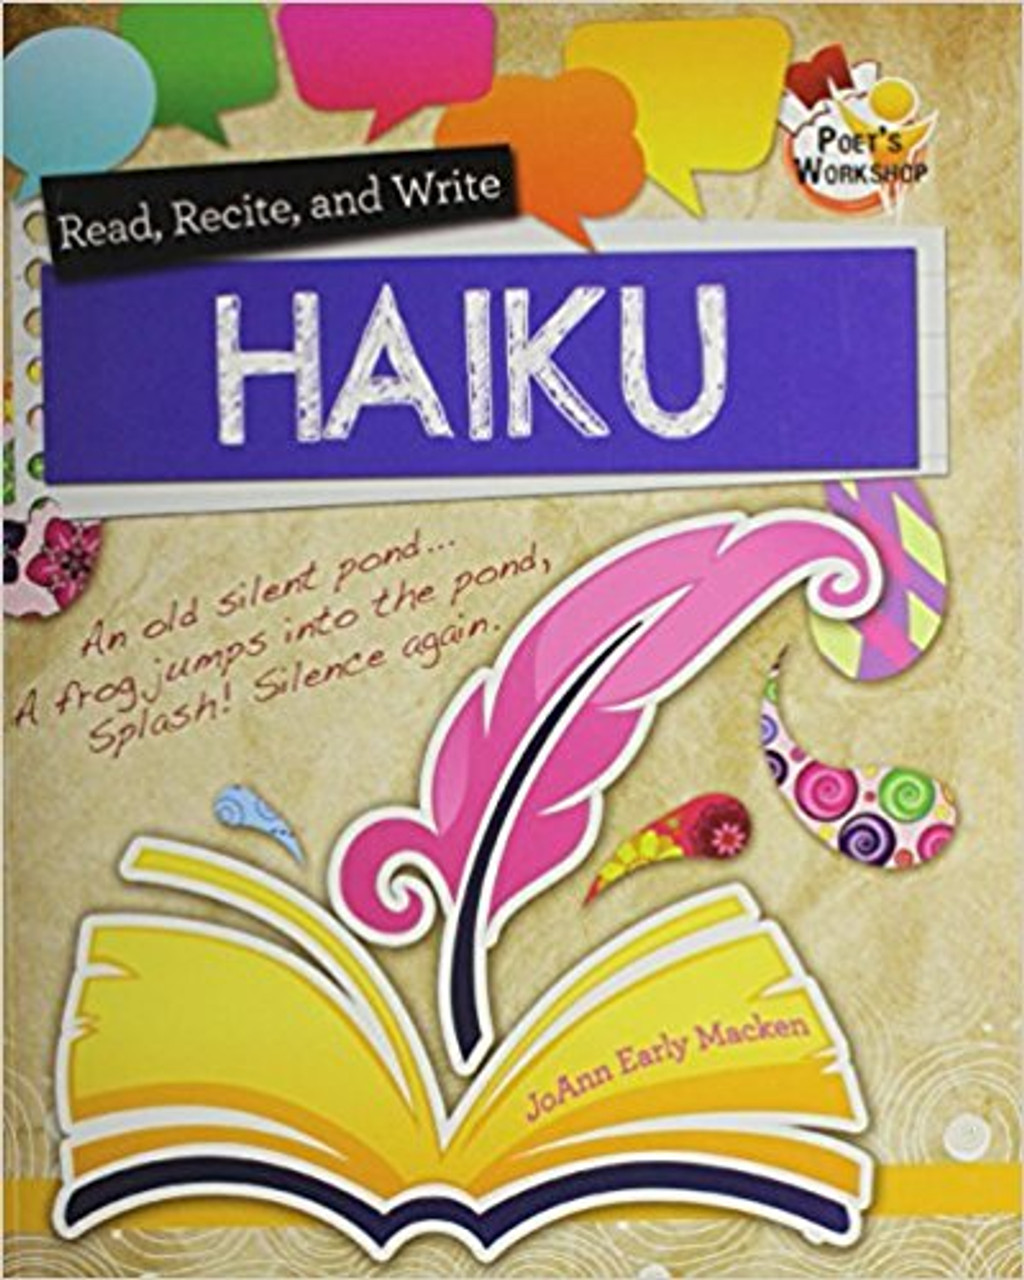 Read, Recite, and Write Haiku (Paperback) by JoAnn Early Macken